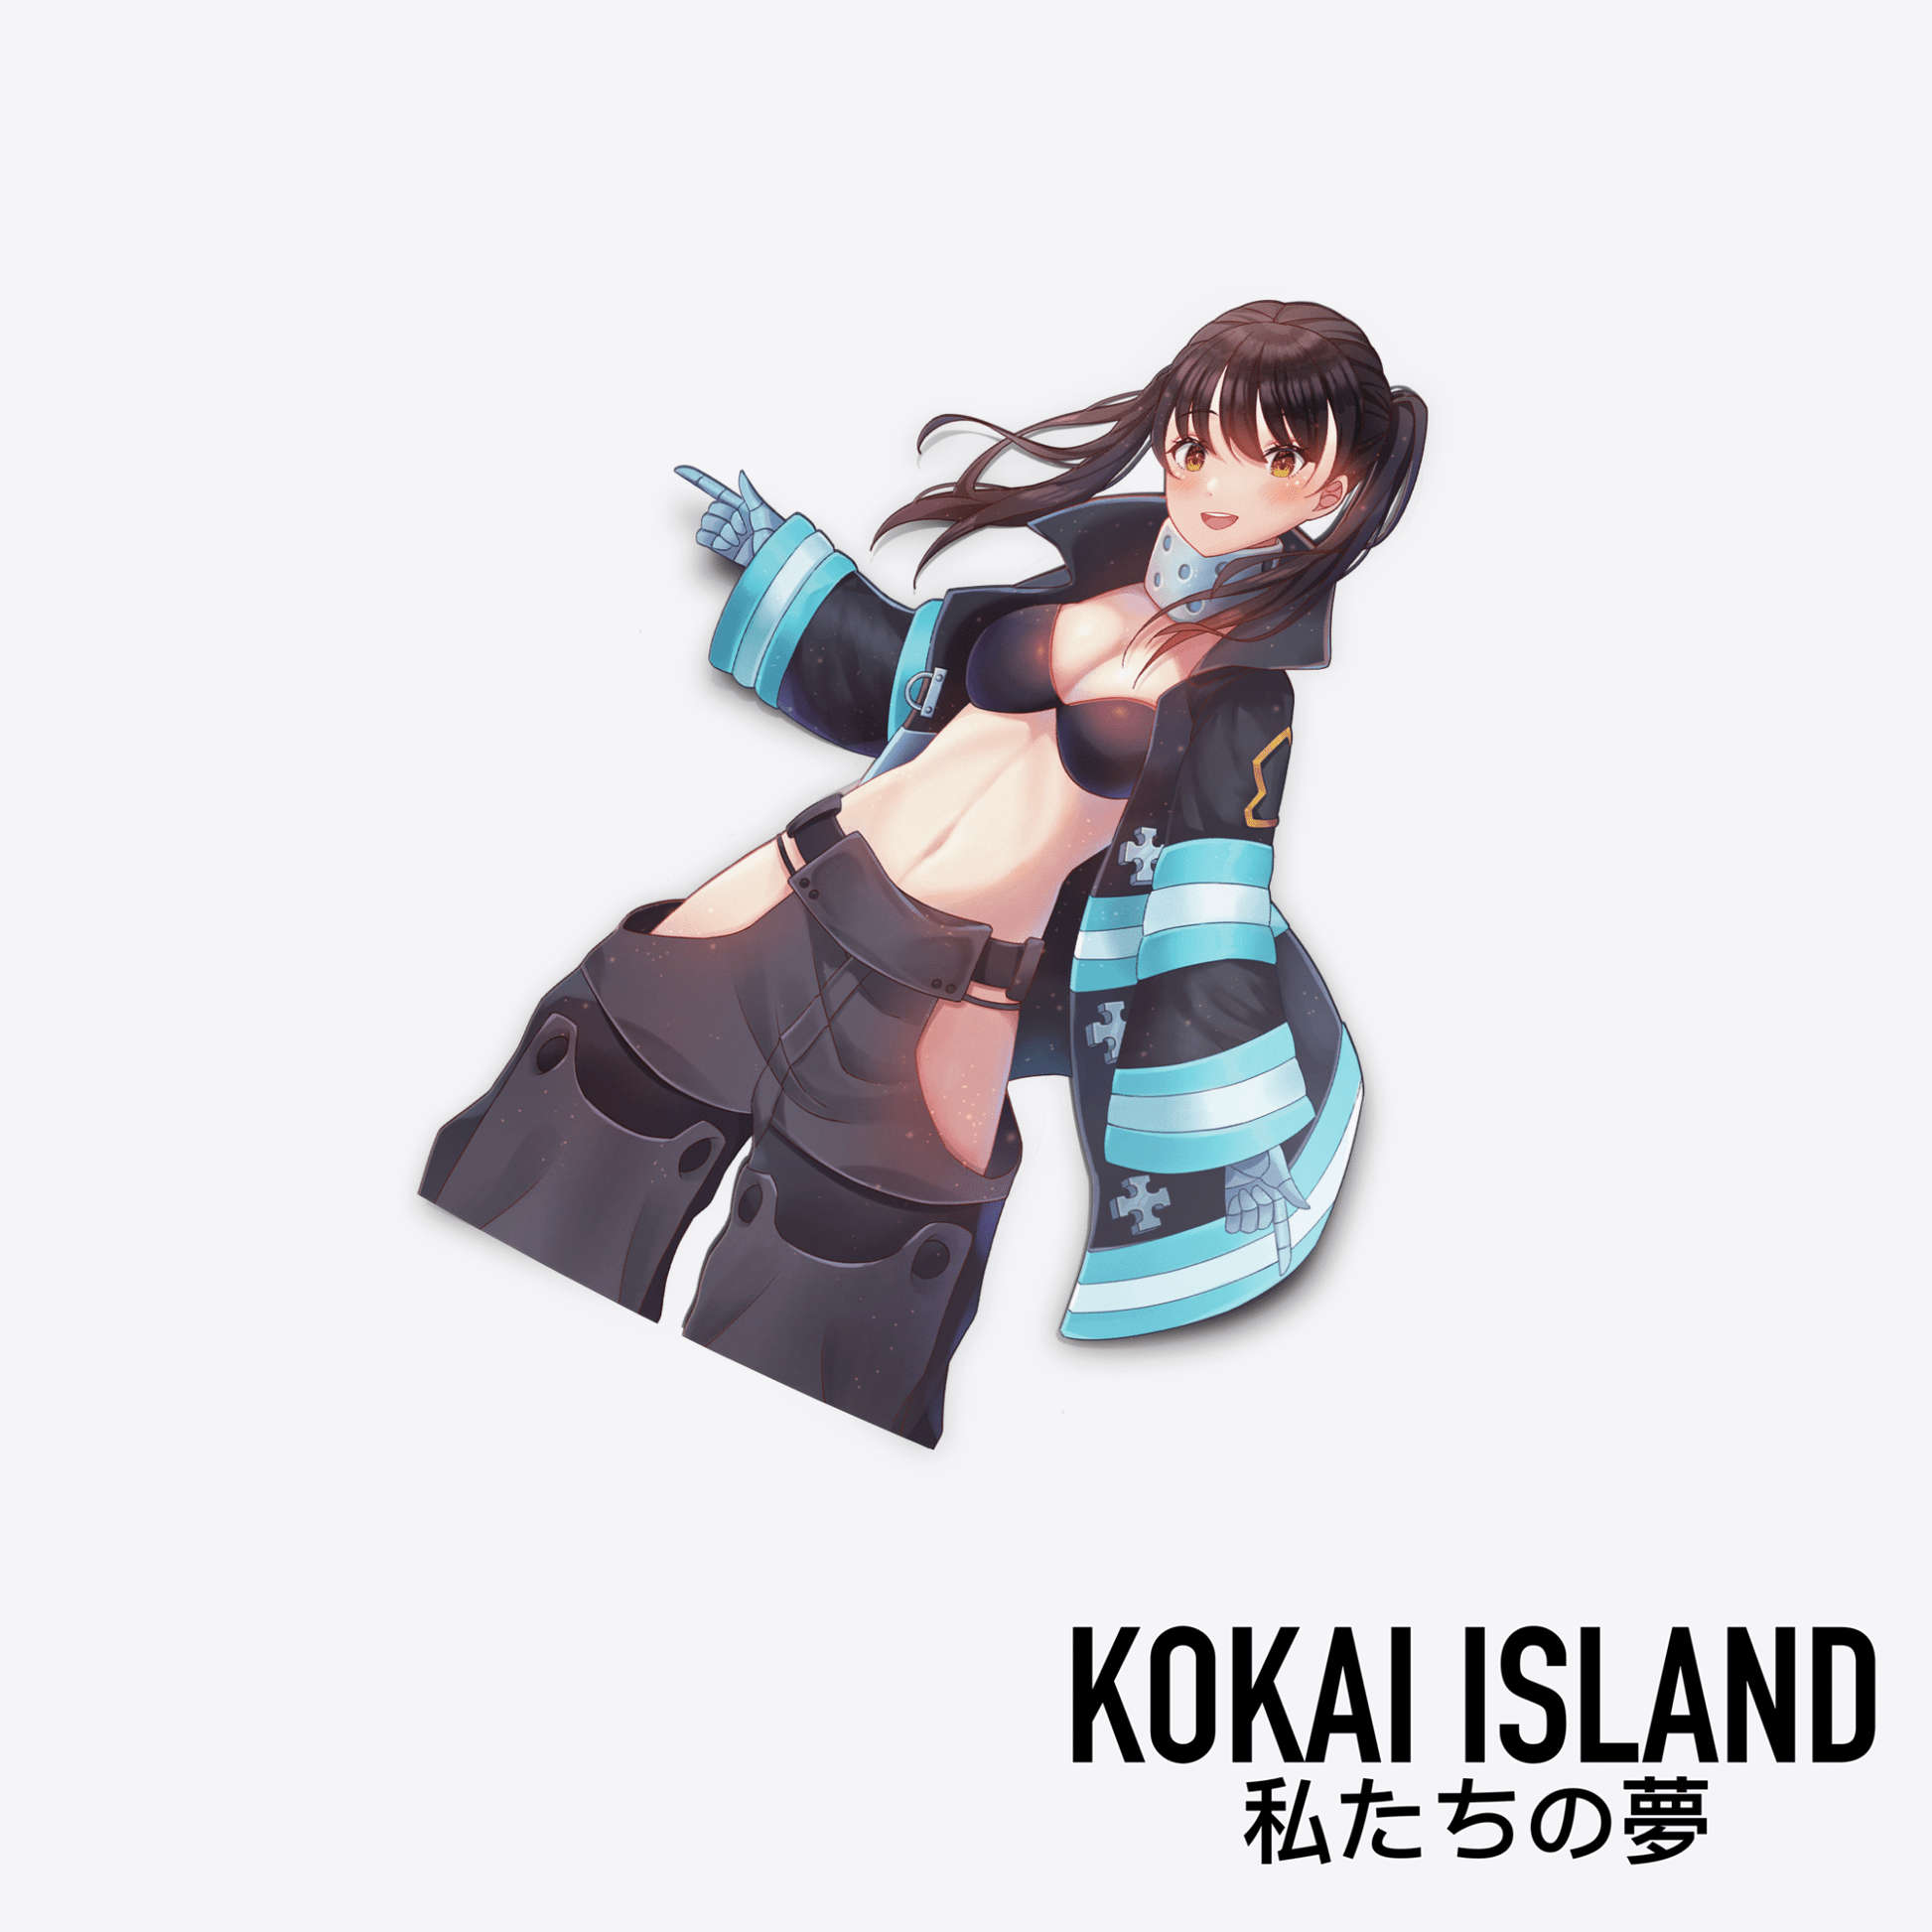 Cat Girl DecalDecalKokai Island